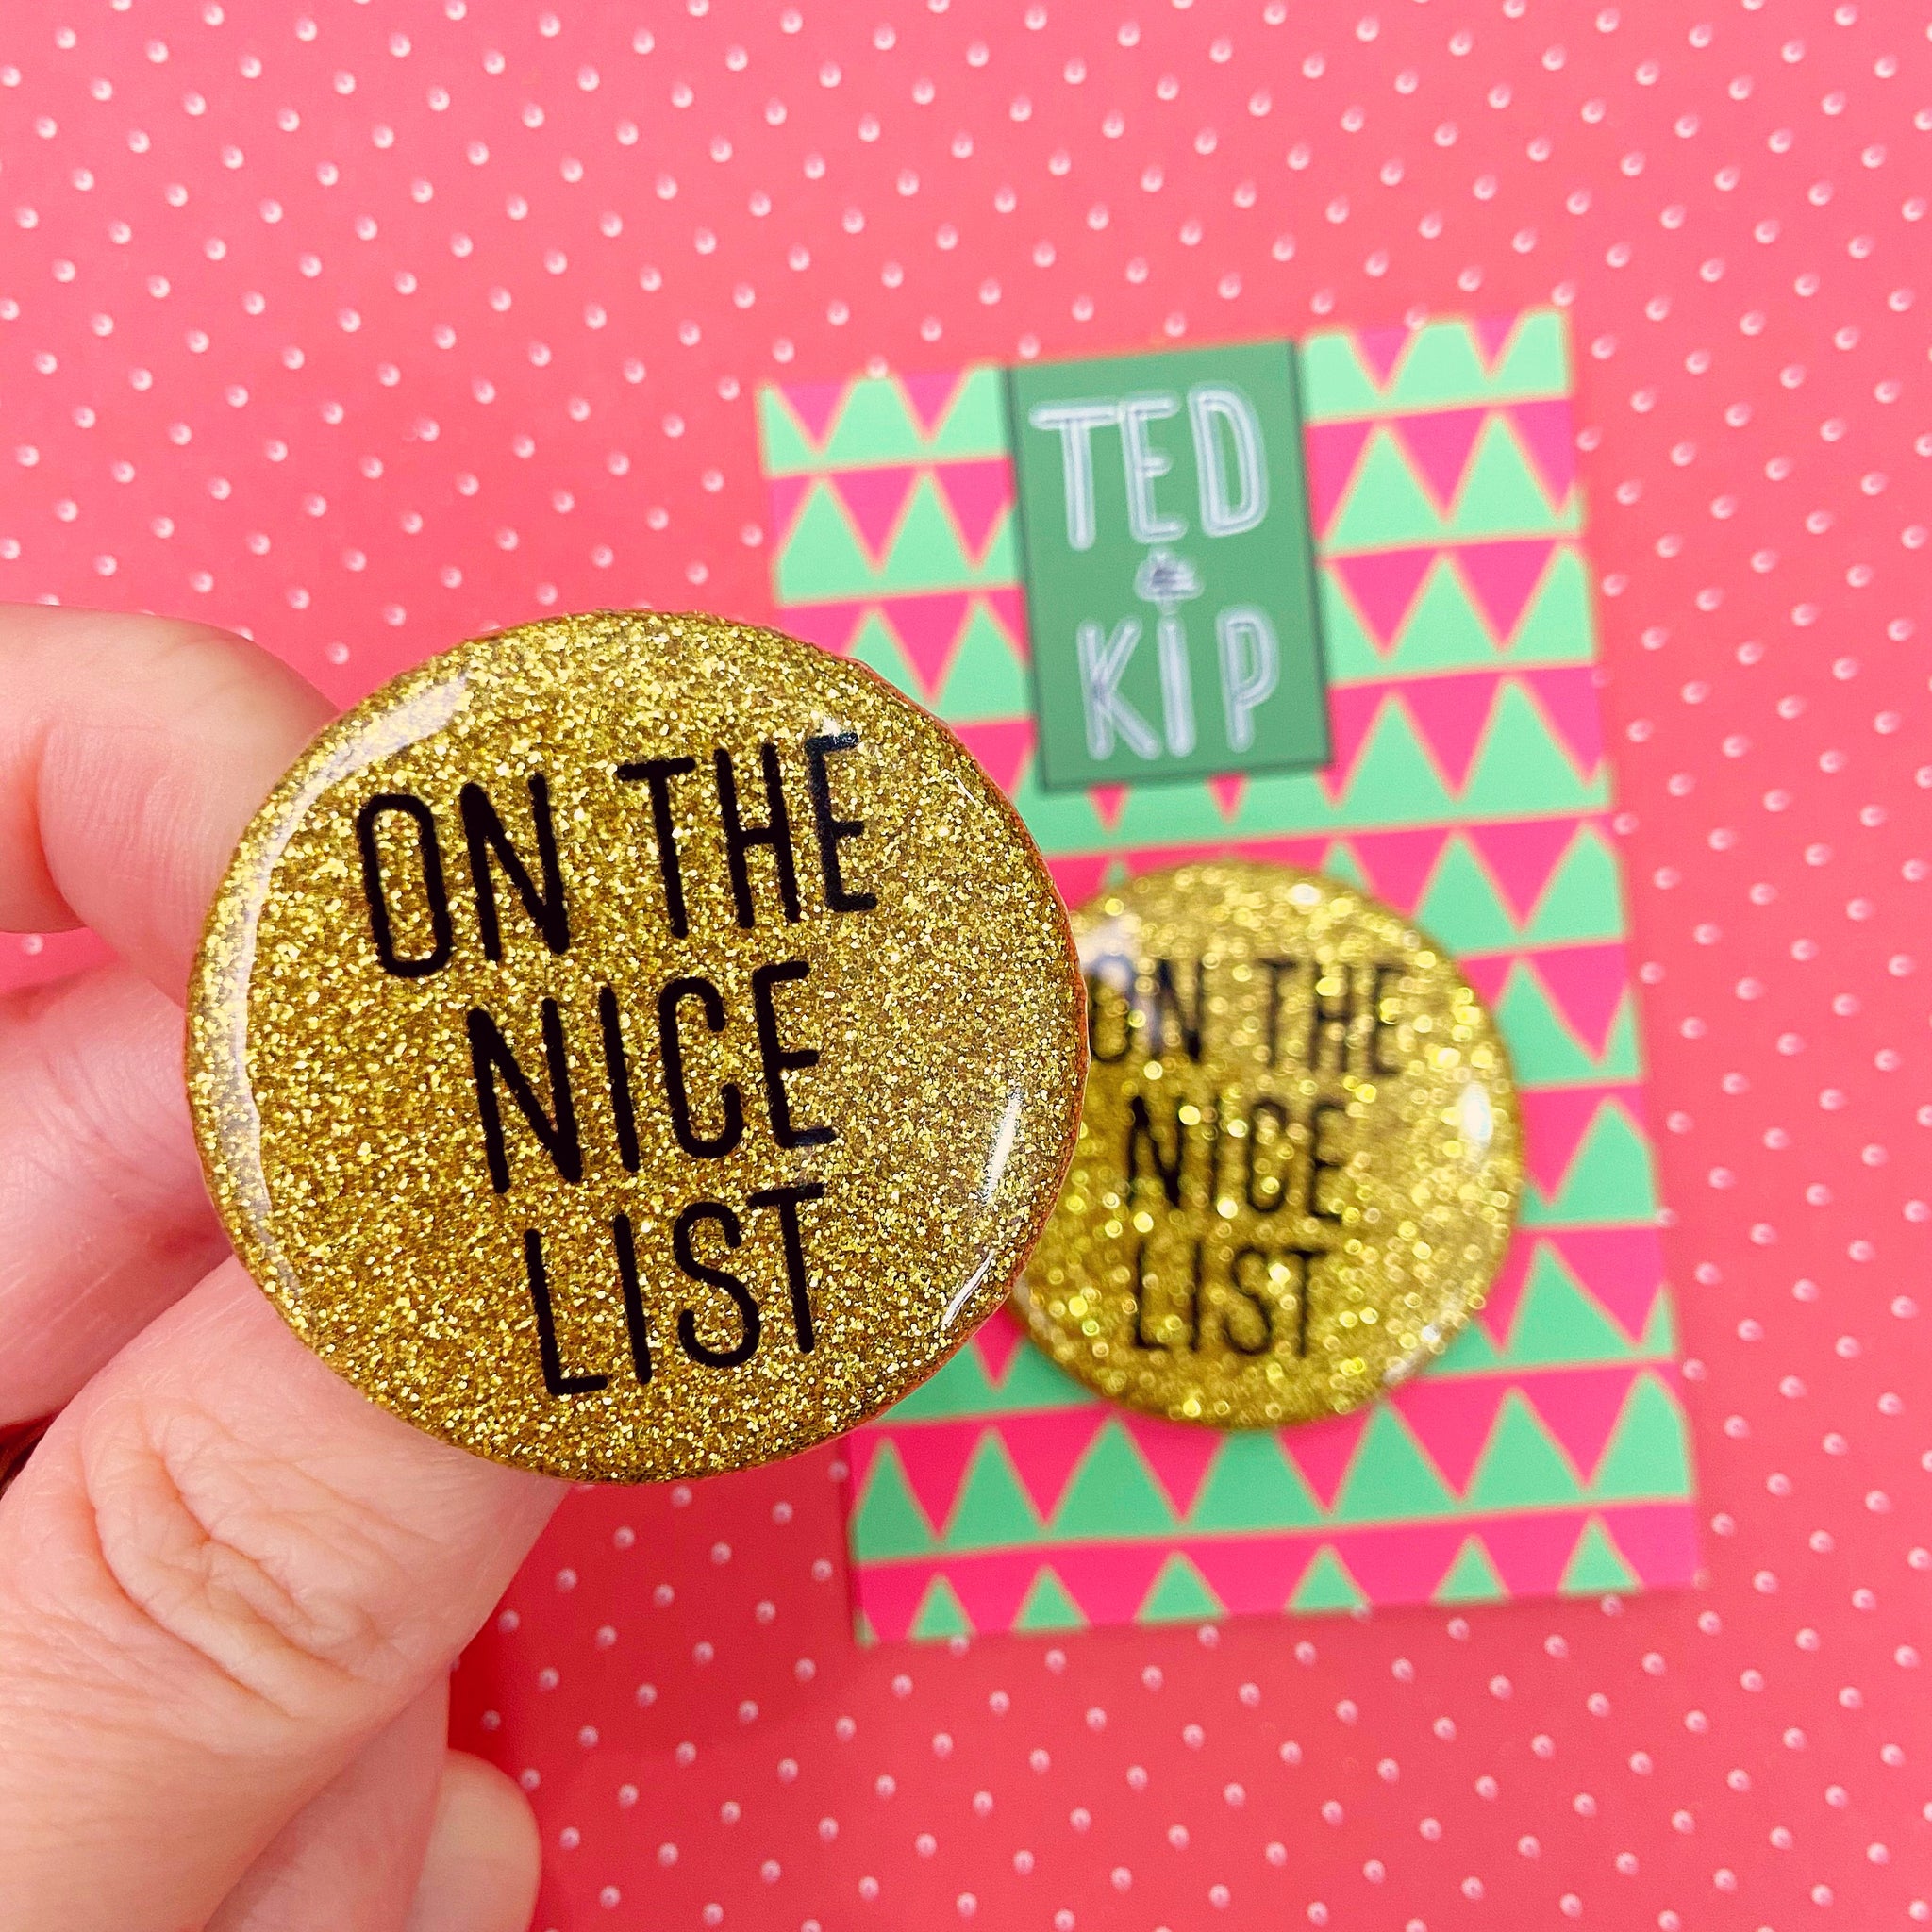 Nice List Gold Glitter Button Badge